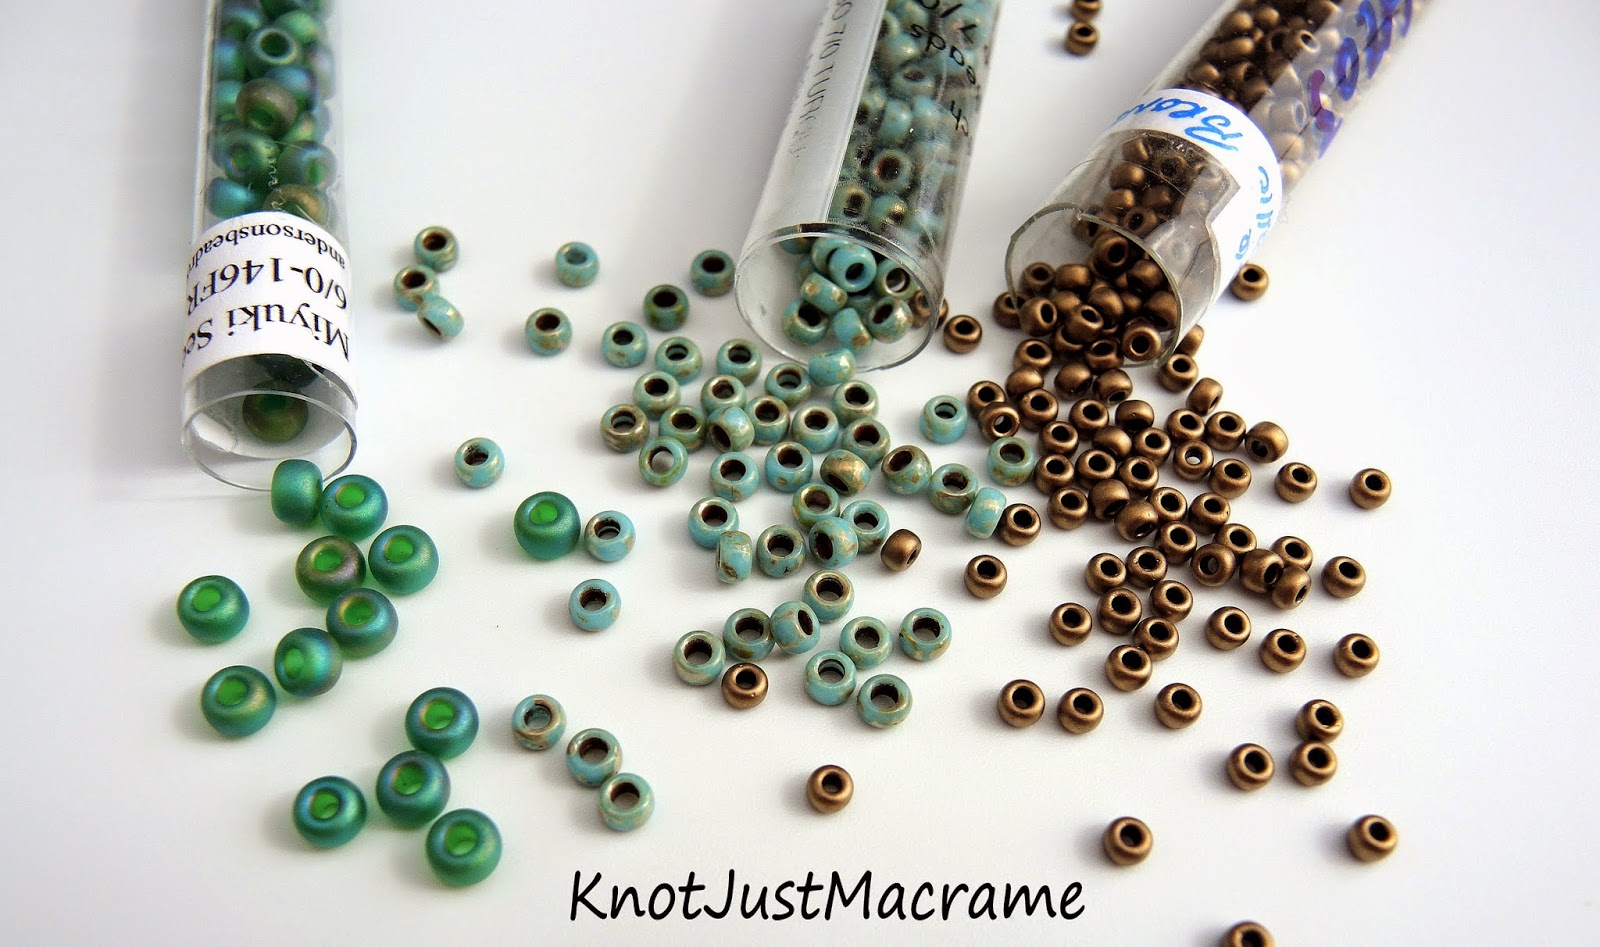 Knot Just Macrame by Sherri Stokey: Matubo Beads and Micro Macrame